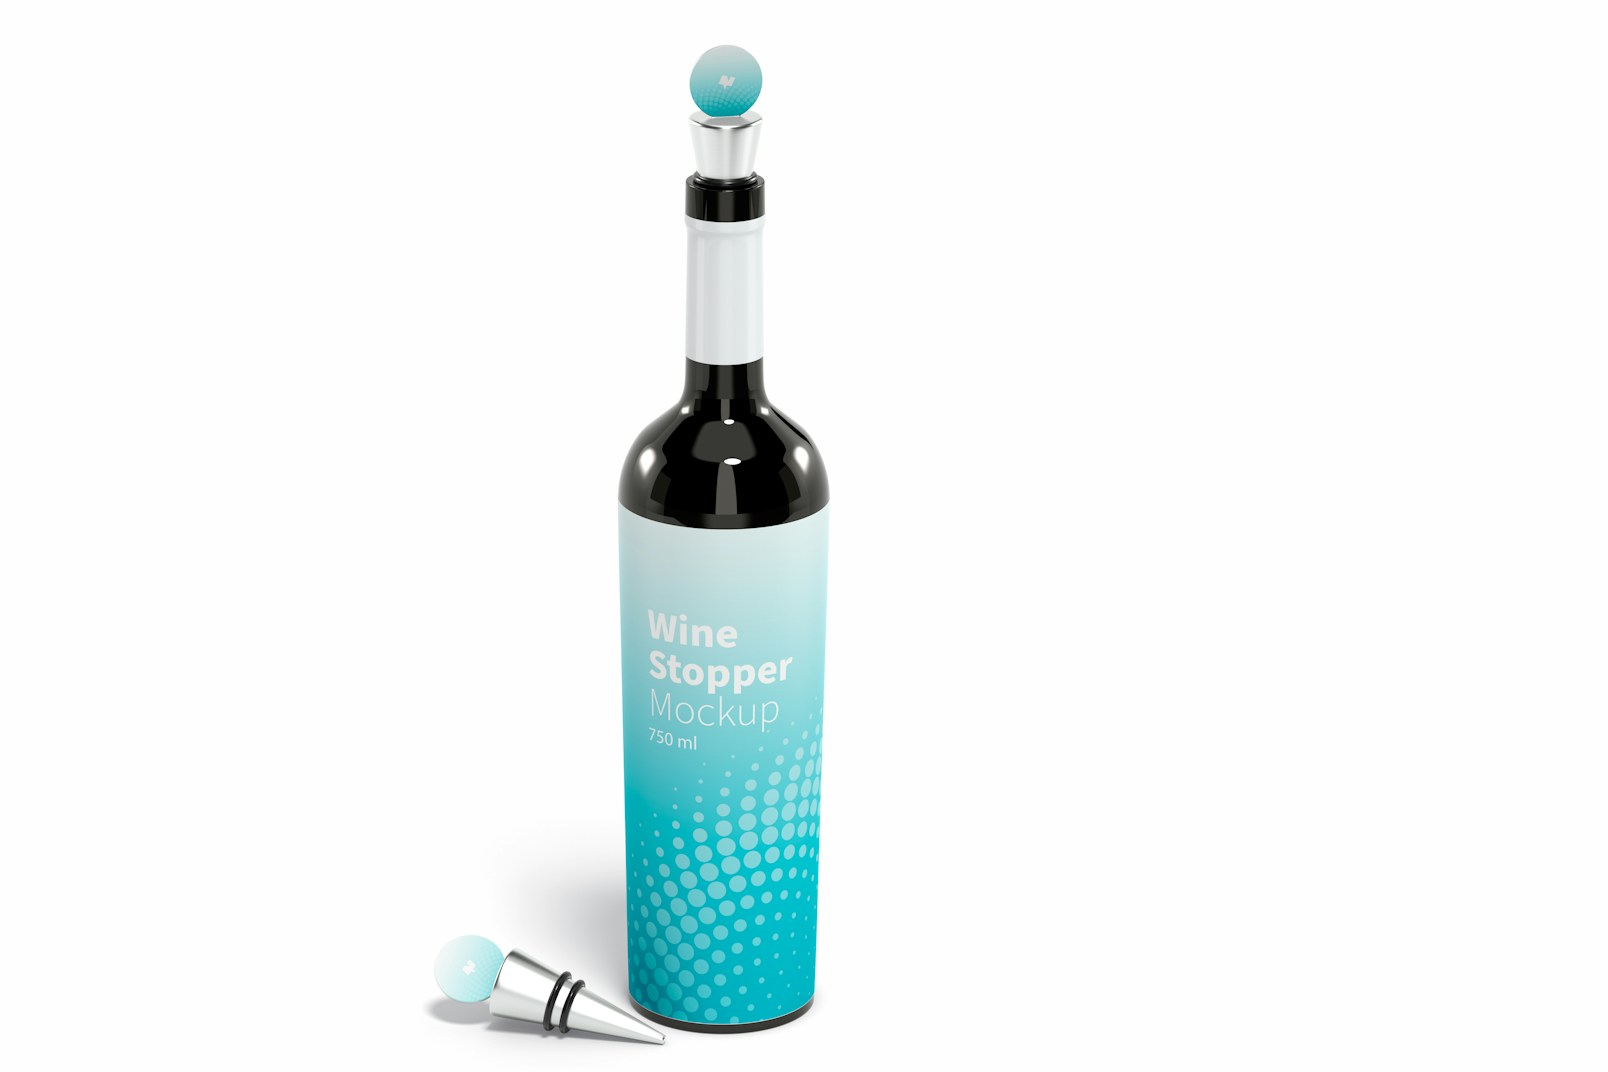 Wine Stopper and Bottle Mockup